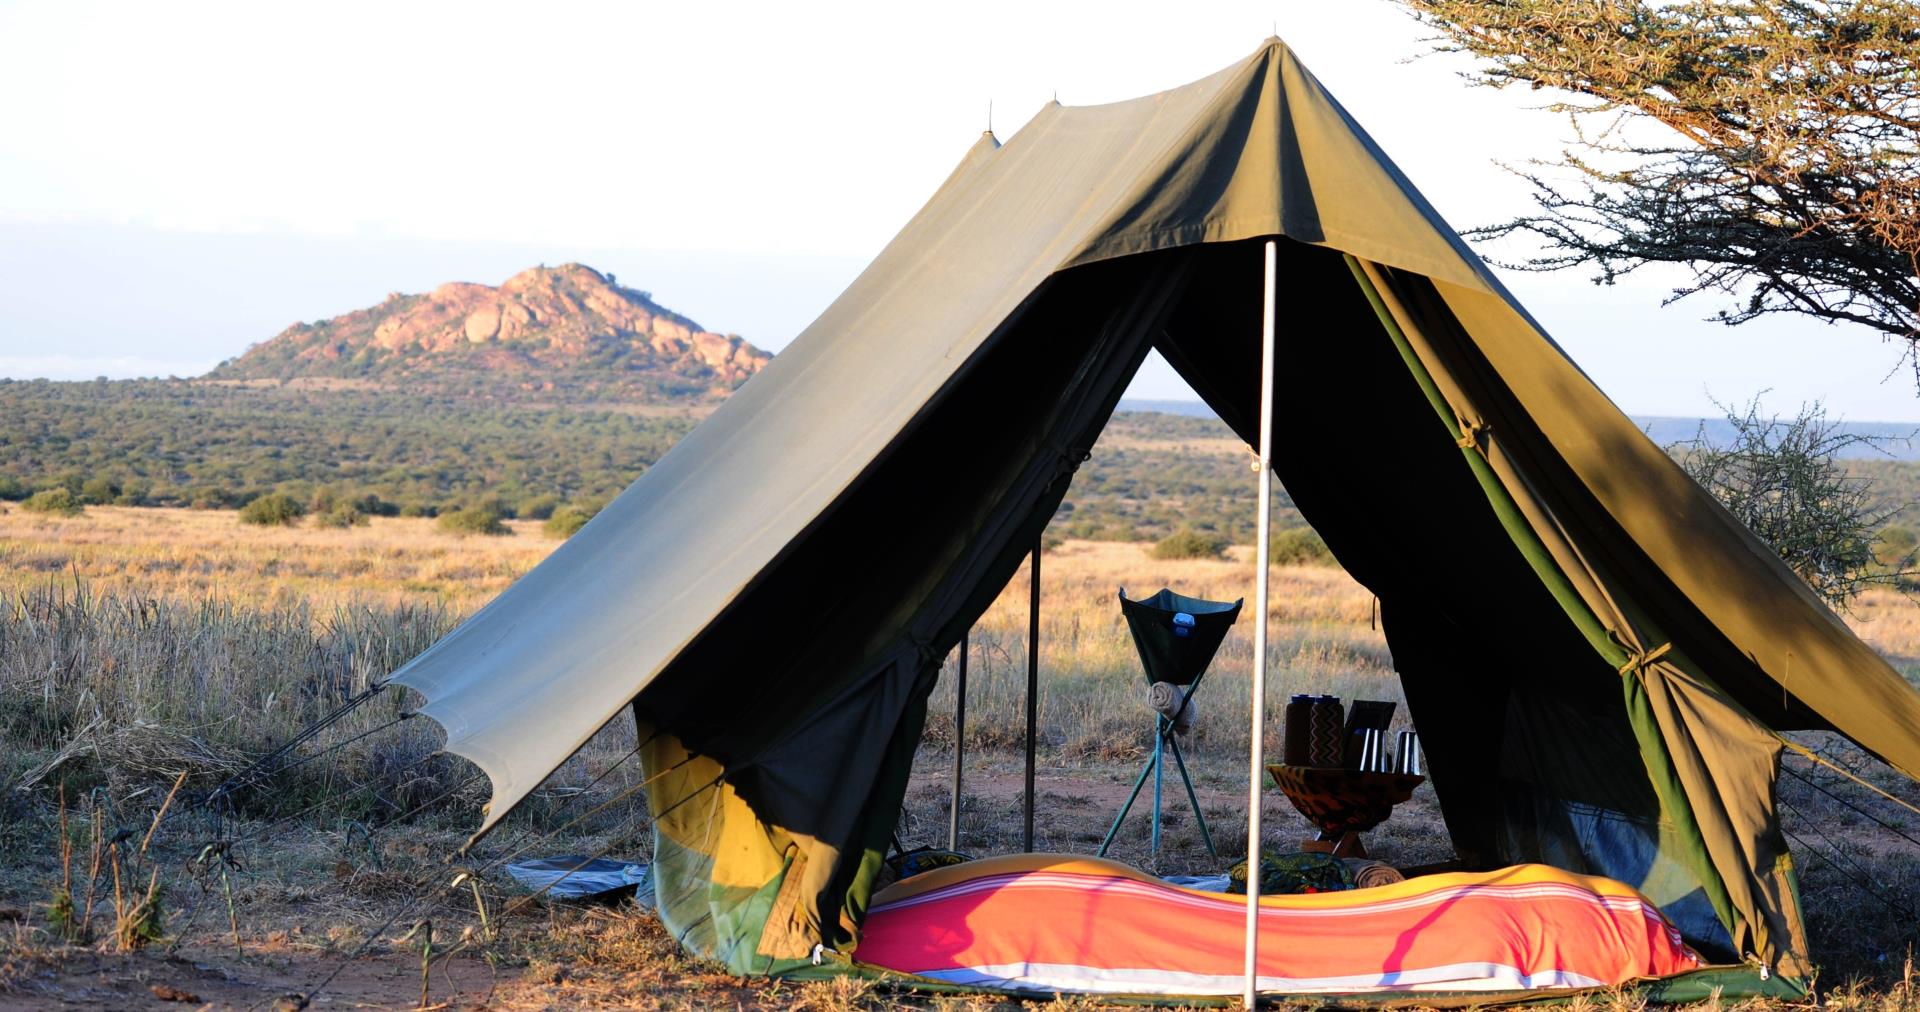 One of the comfortable tents - Karisia Walking Safaris